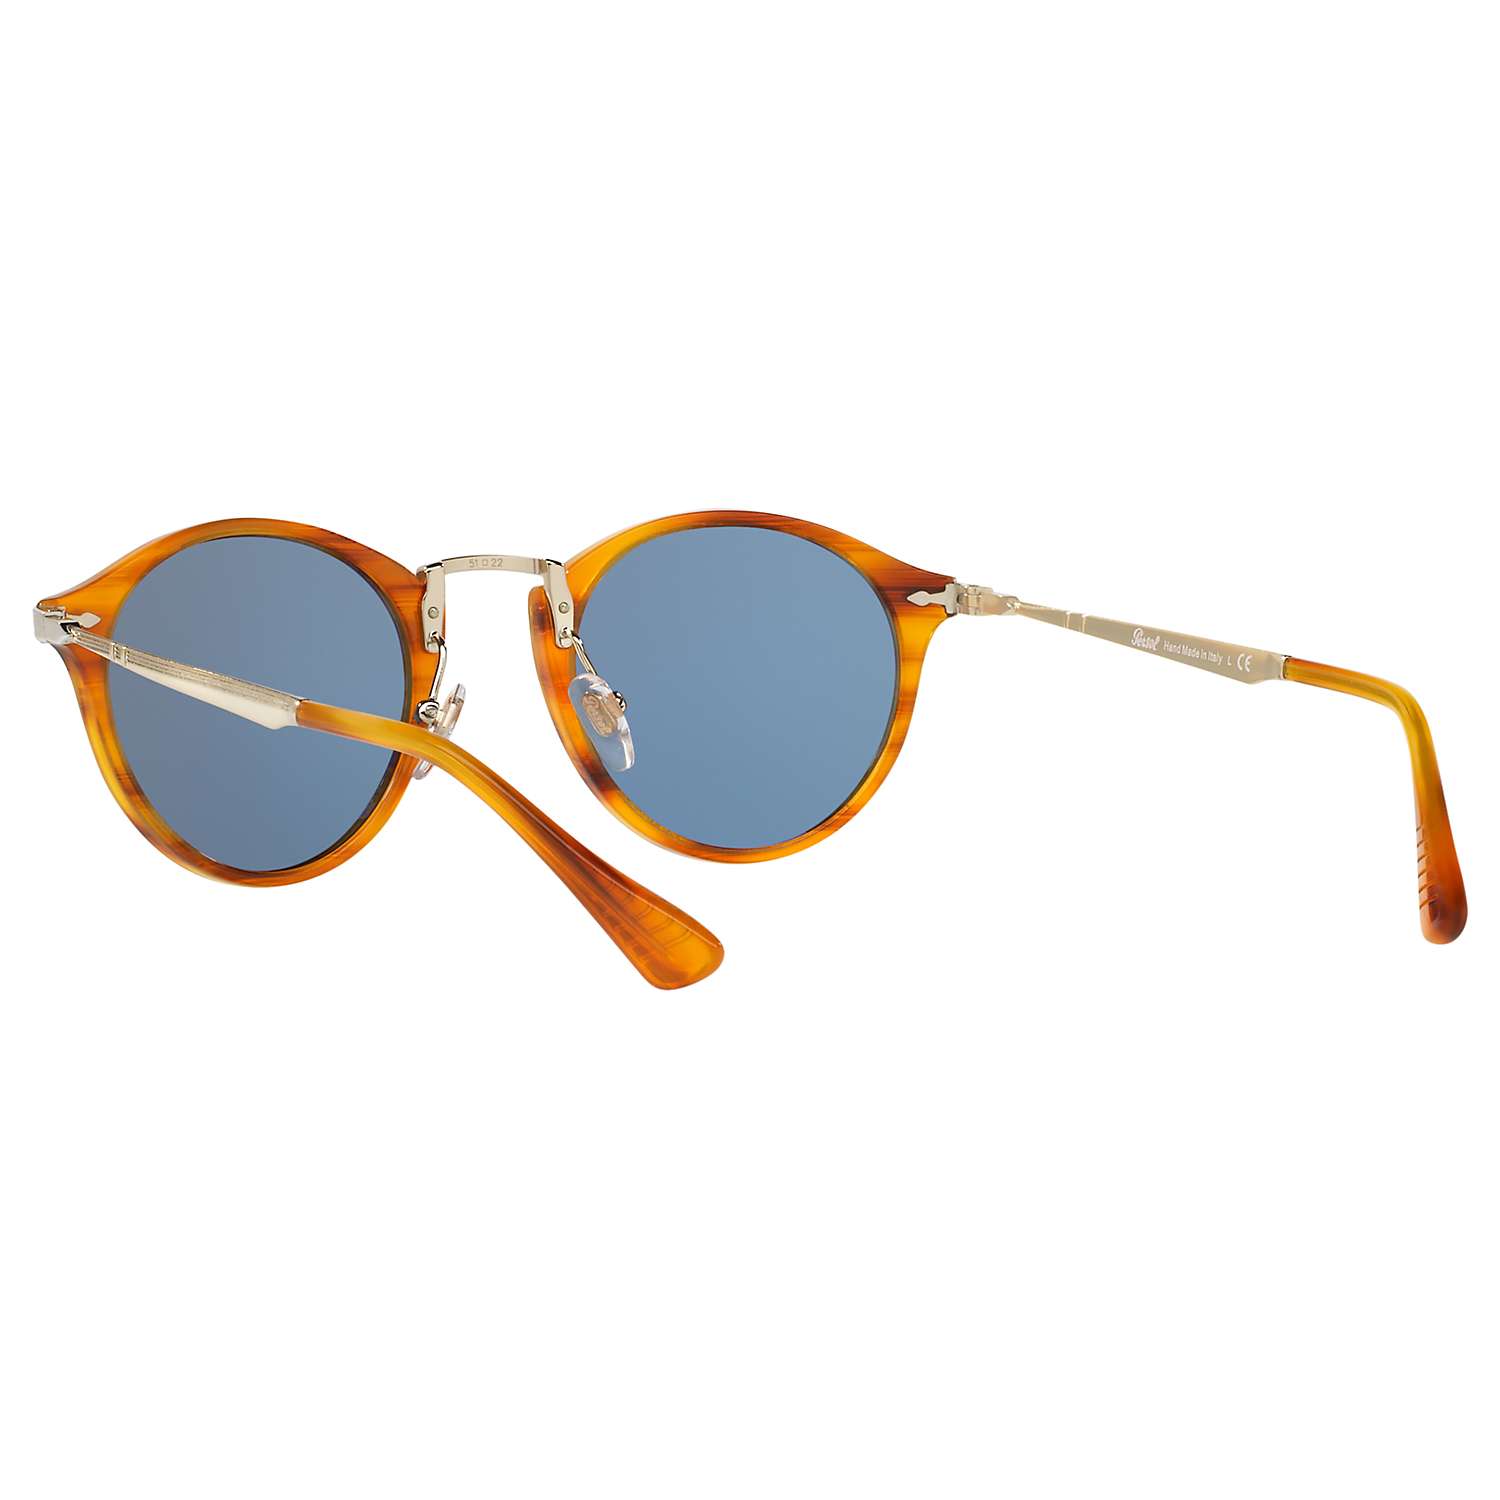 Buy Persol PO3166S Calligrapher Edition Oval Sunglasses, Havana/Blue Online at johnlewis.com